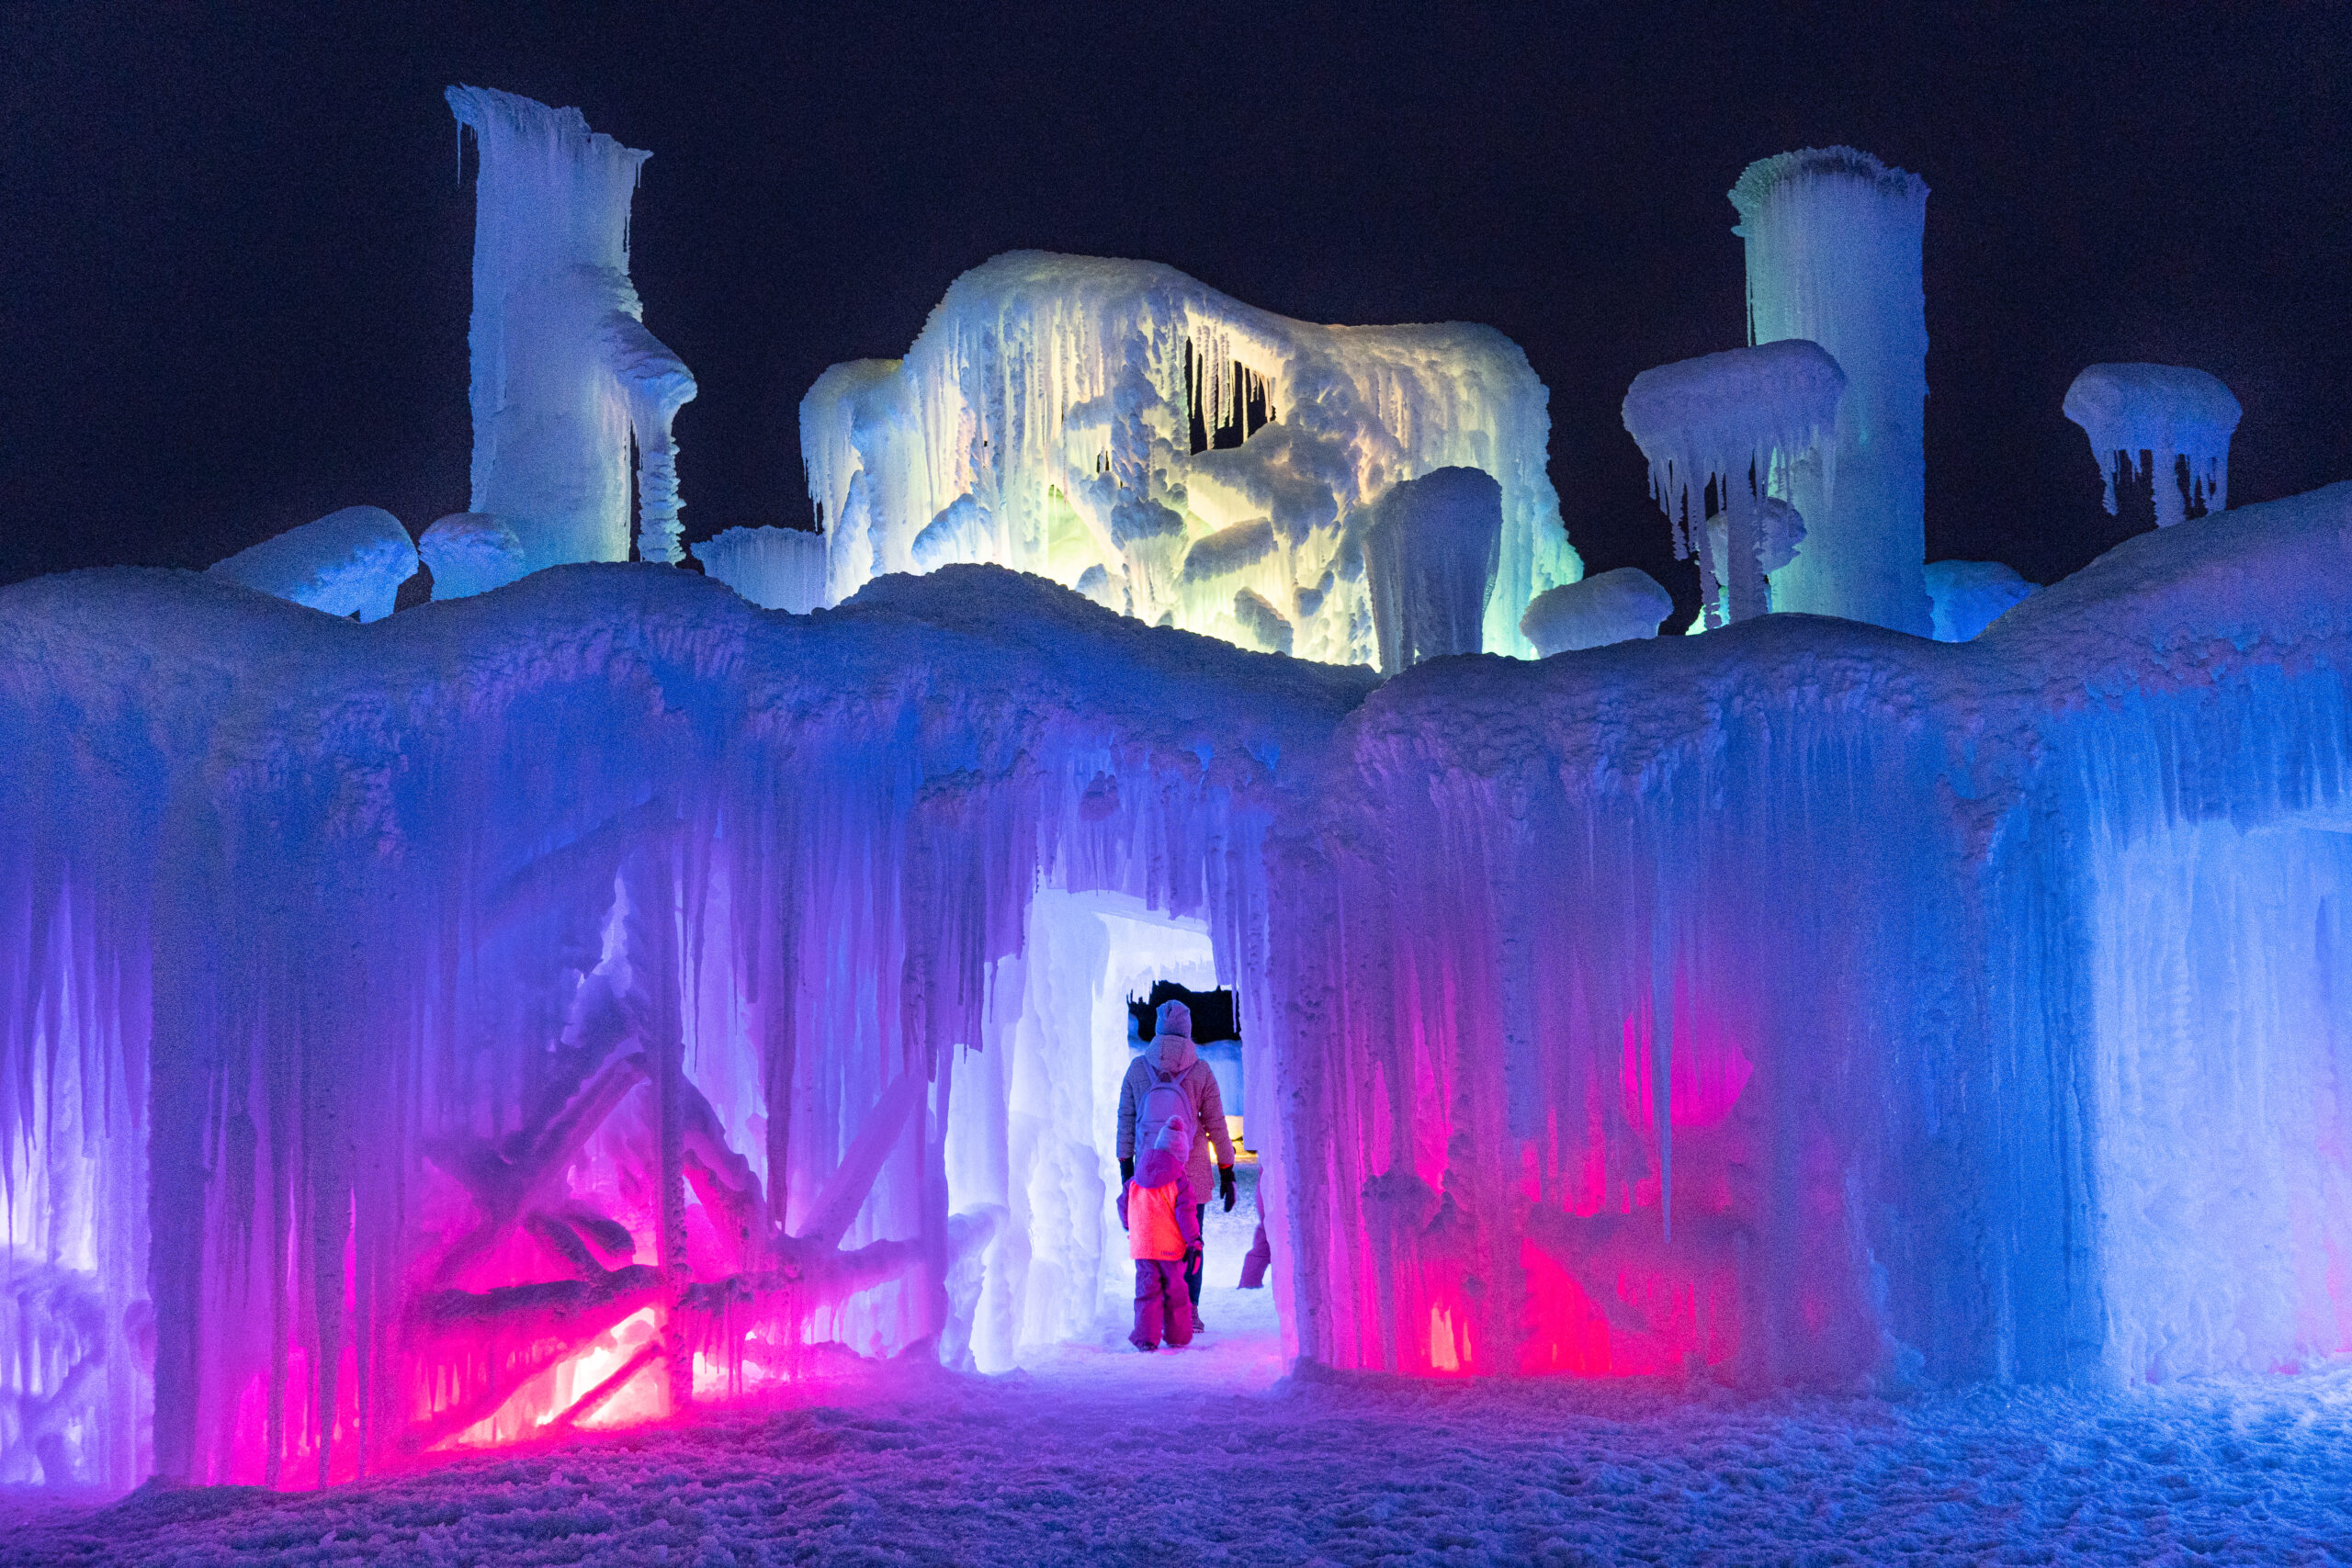 The Ice Palace Minnesota lit up at night.